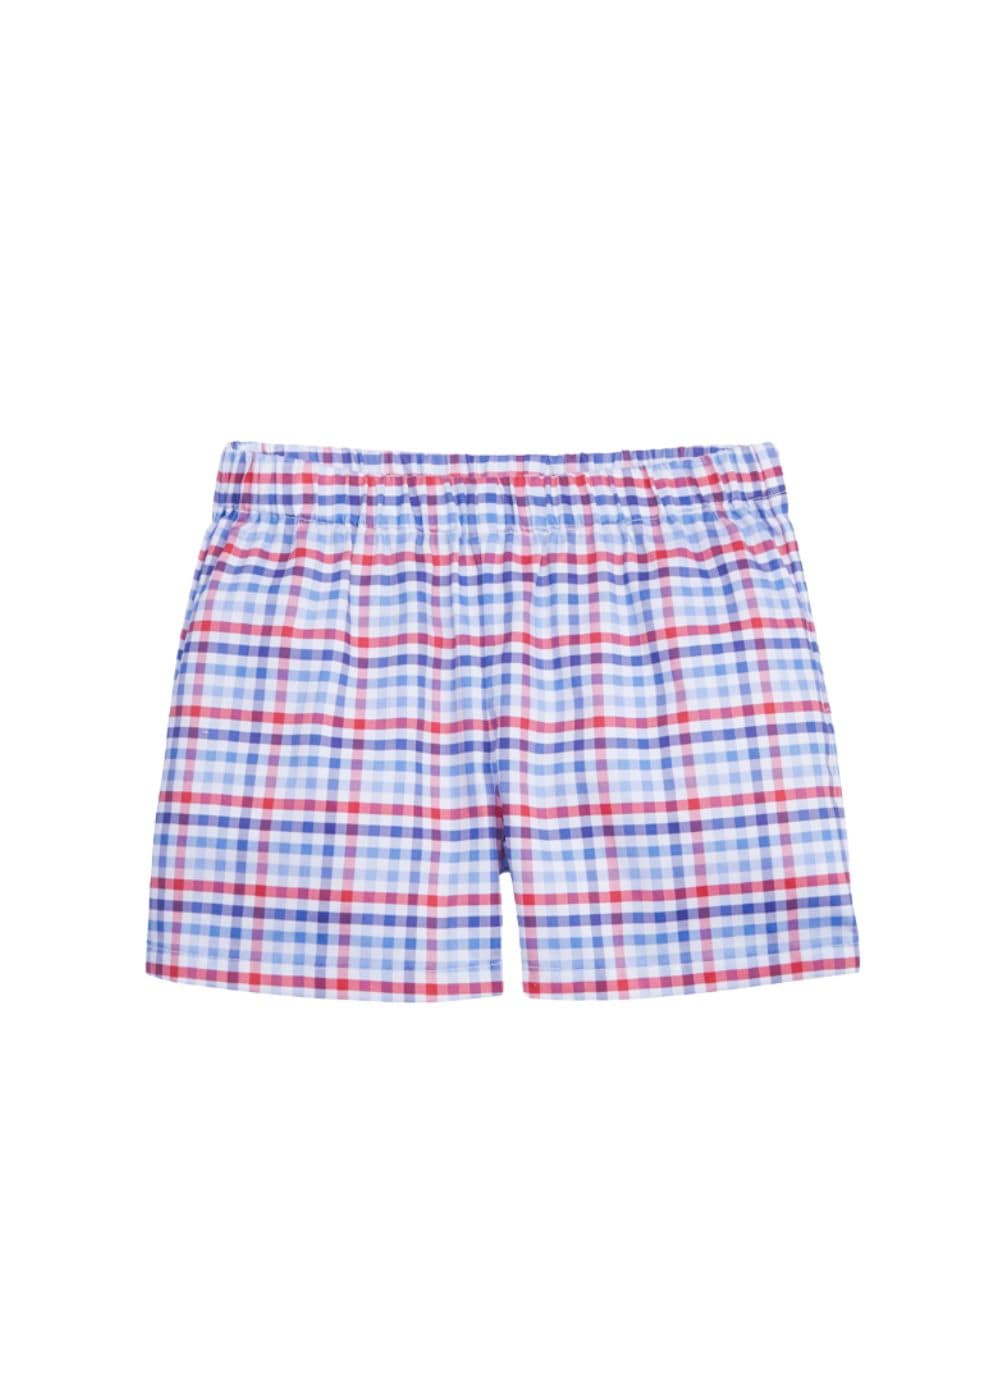 seguridadindustrialcr boy's elastic waist shorts, patriotic plaid for spring